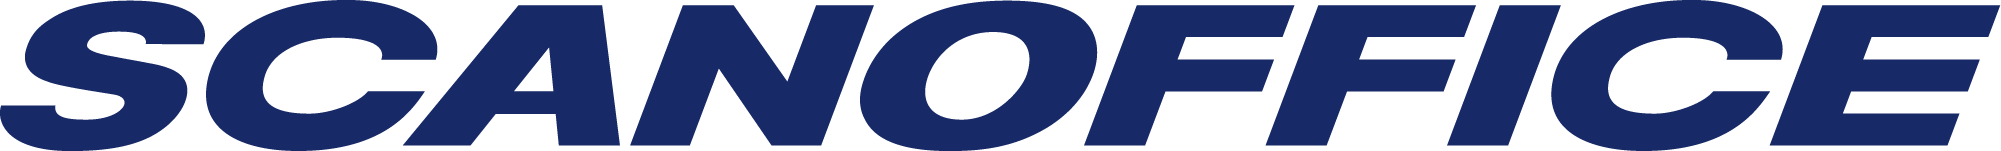 Scanoffice_logo